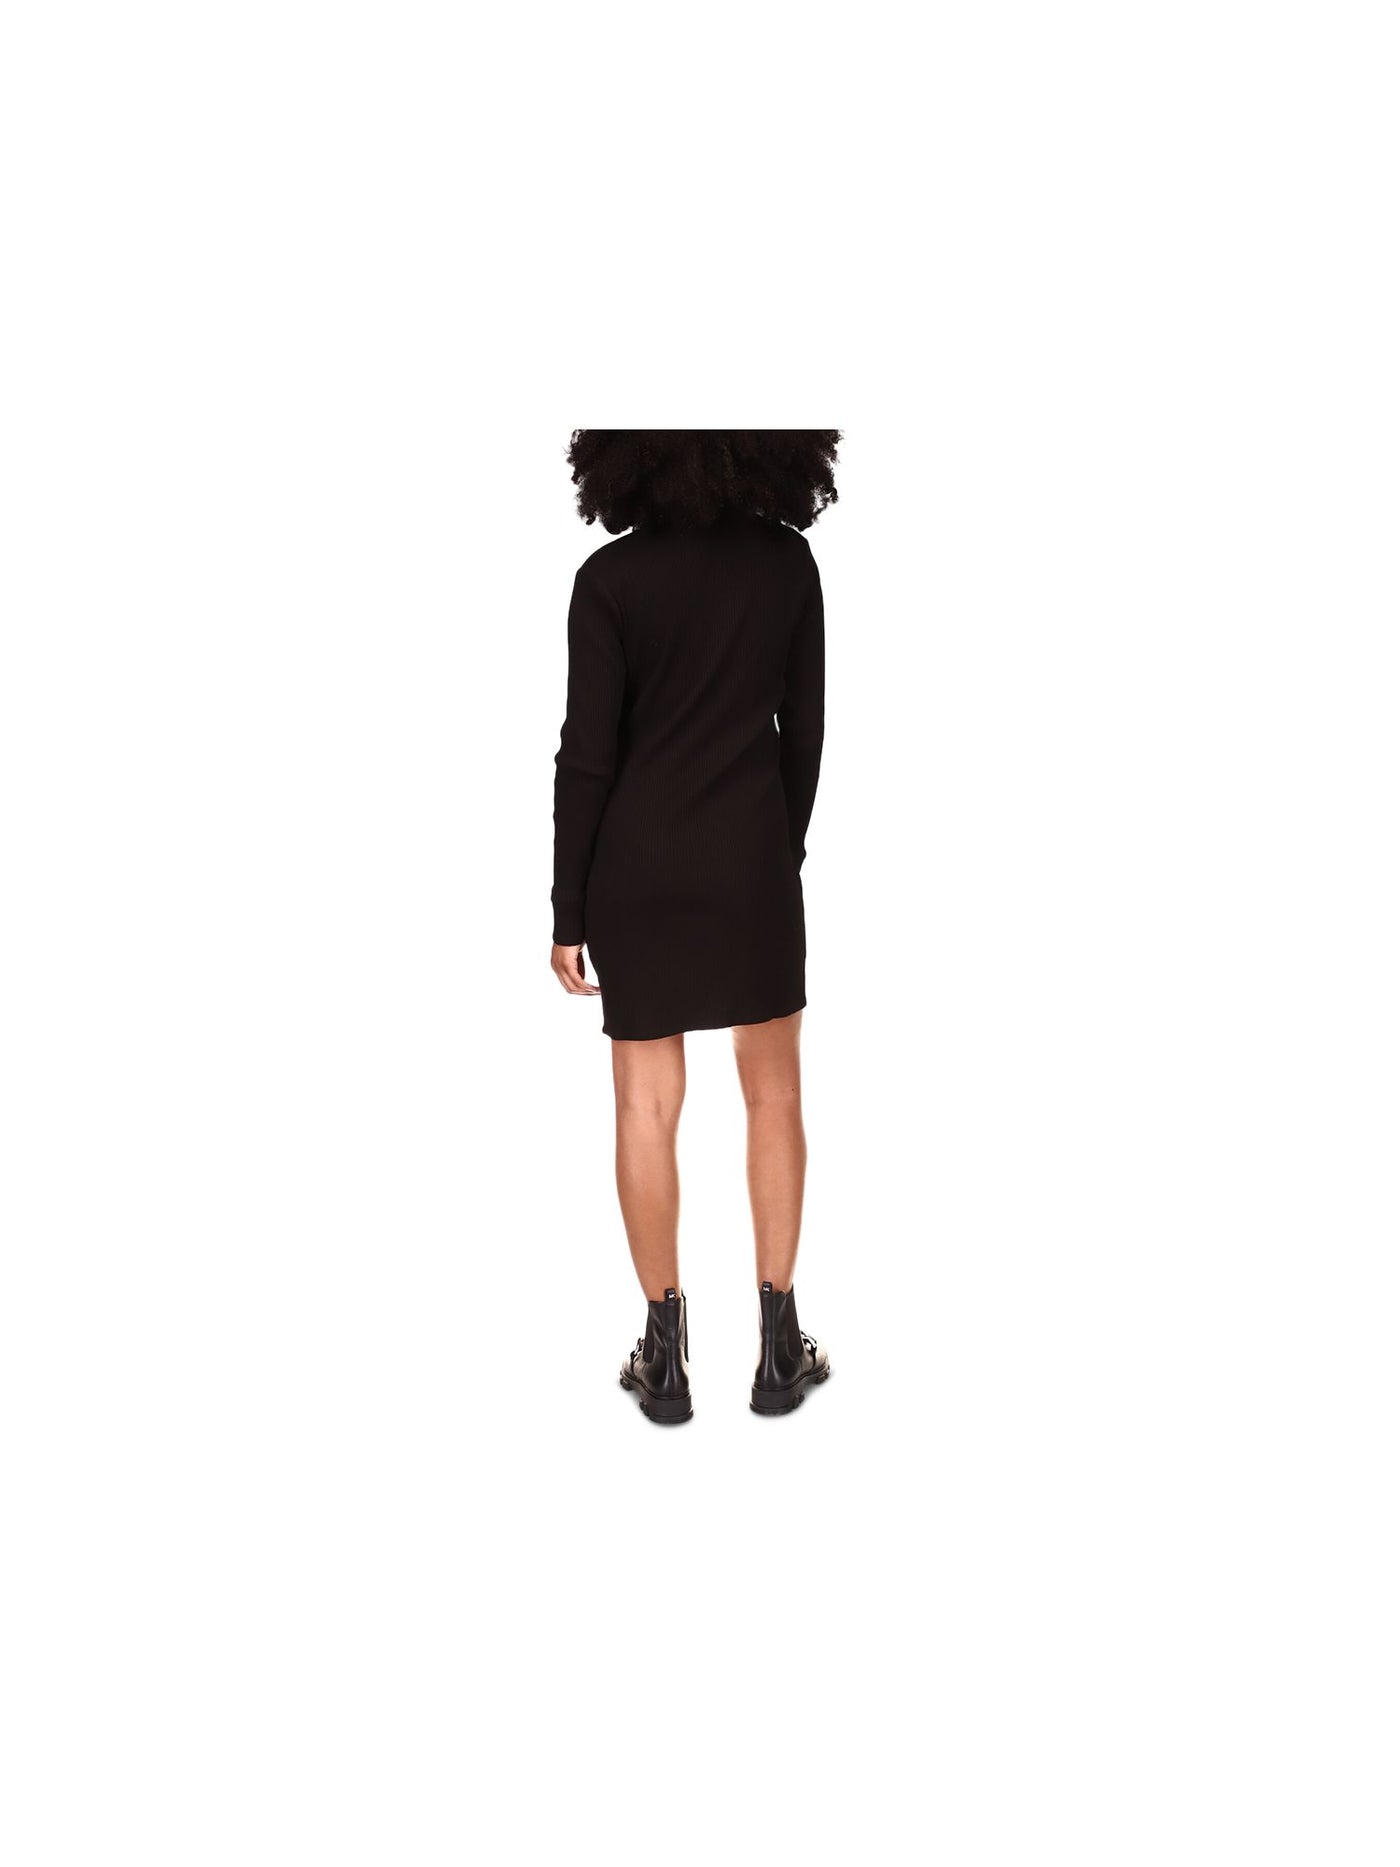 MICHAEL MICHAEL KORS Womens Black Ribbed Long Sleeve Mock Neck Above The Knee Shift Dress S